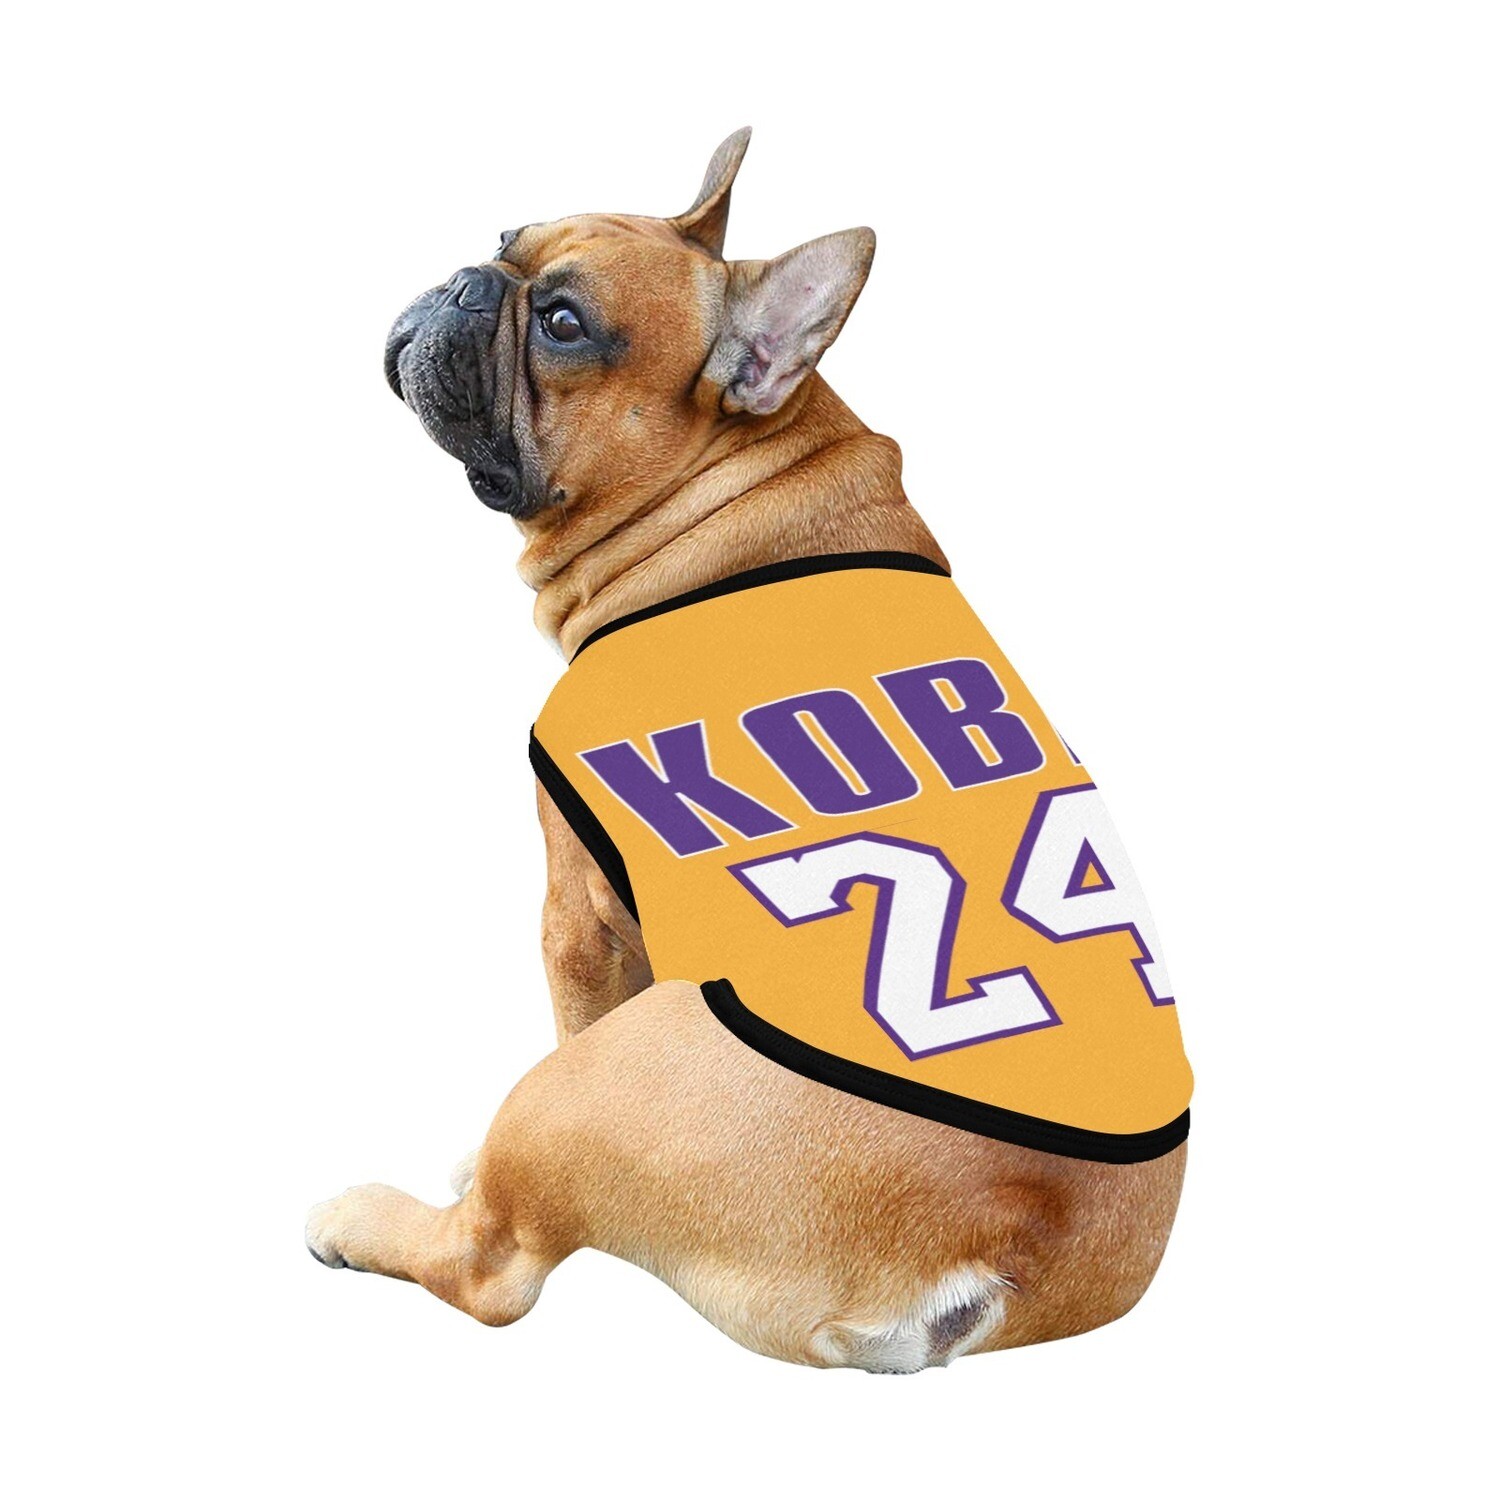 🐕 Lakers 24 Kobe Bryant Dog t-shirt, Dog Tank Top, Dog shirt, Dog clothes, Gifts, front back print, 7 sizes XS to 3XL, dog t-shirt yellow